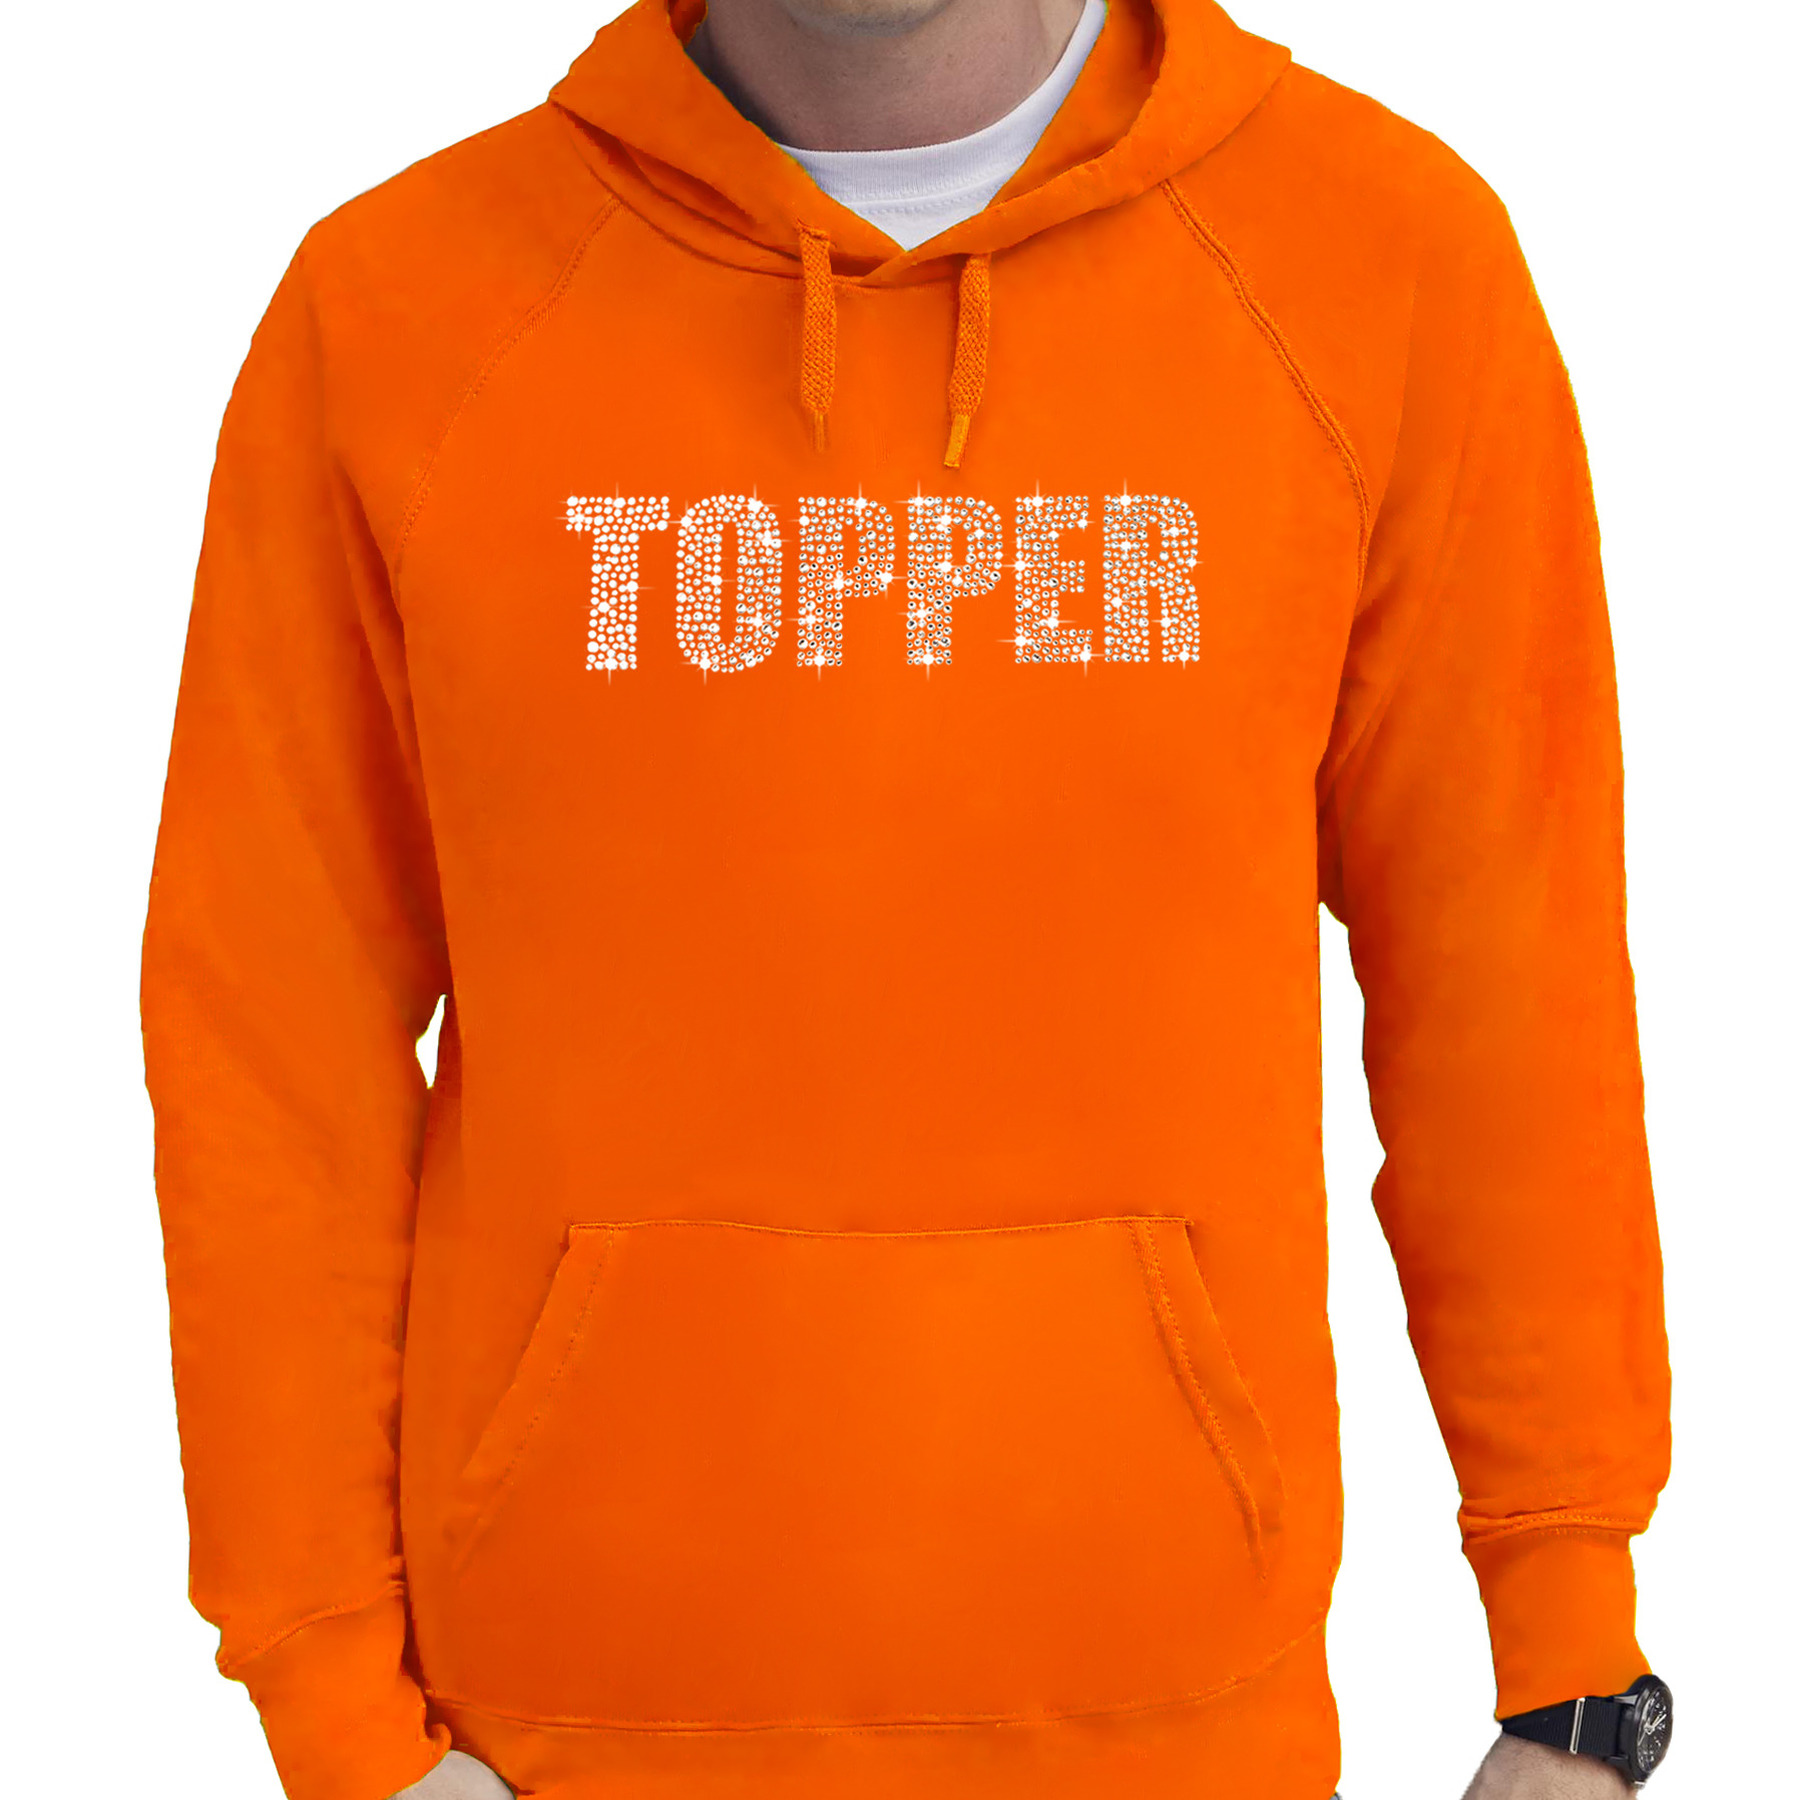 Glitter foute trui hoodie oranje Topper glitter steentjes voor heren Capuchon trui